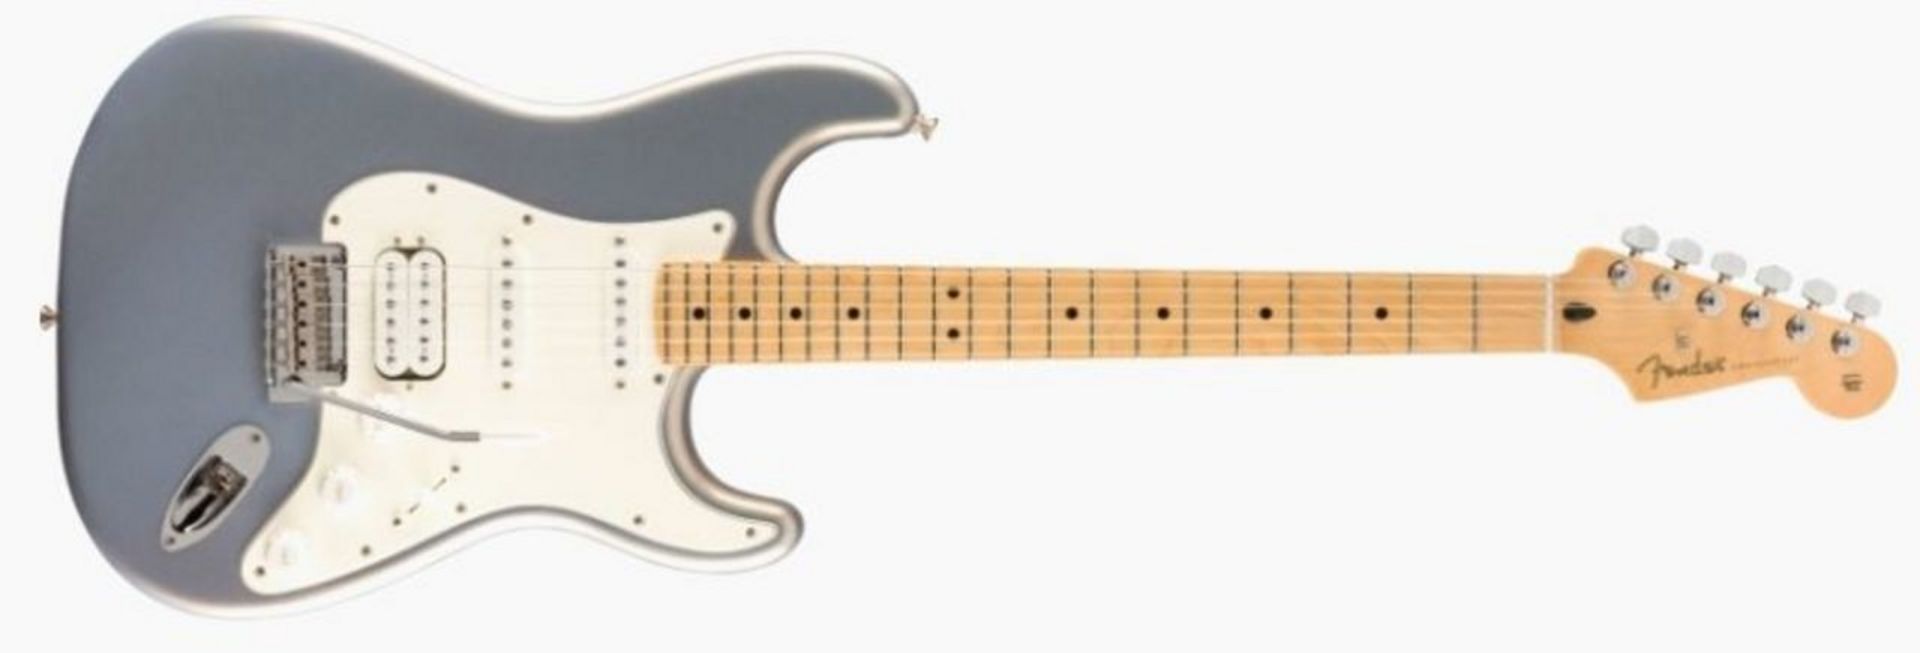 Fender - PLAYER STRATOCASTER HSS Silver